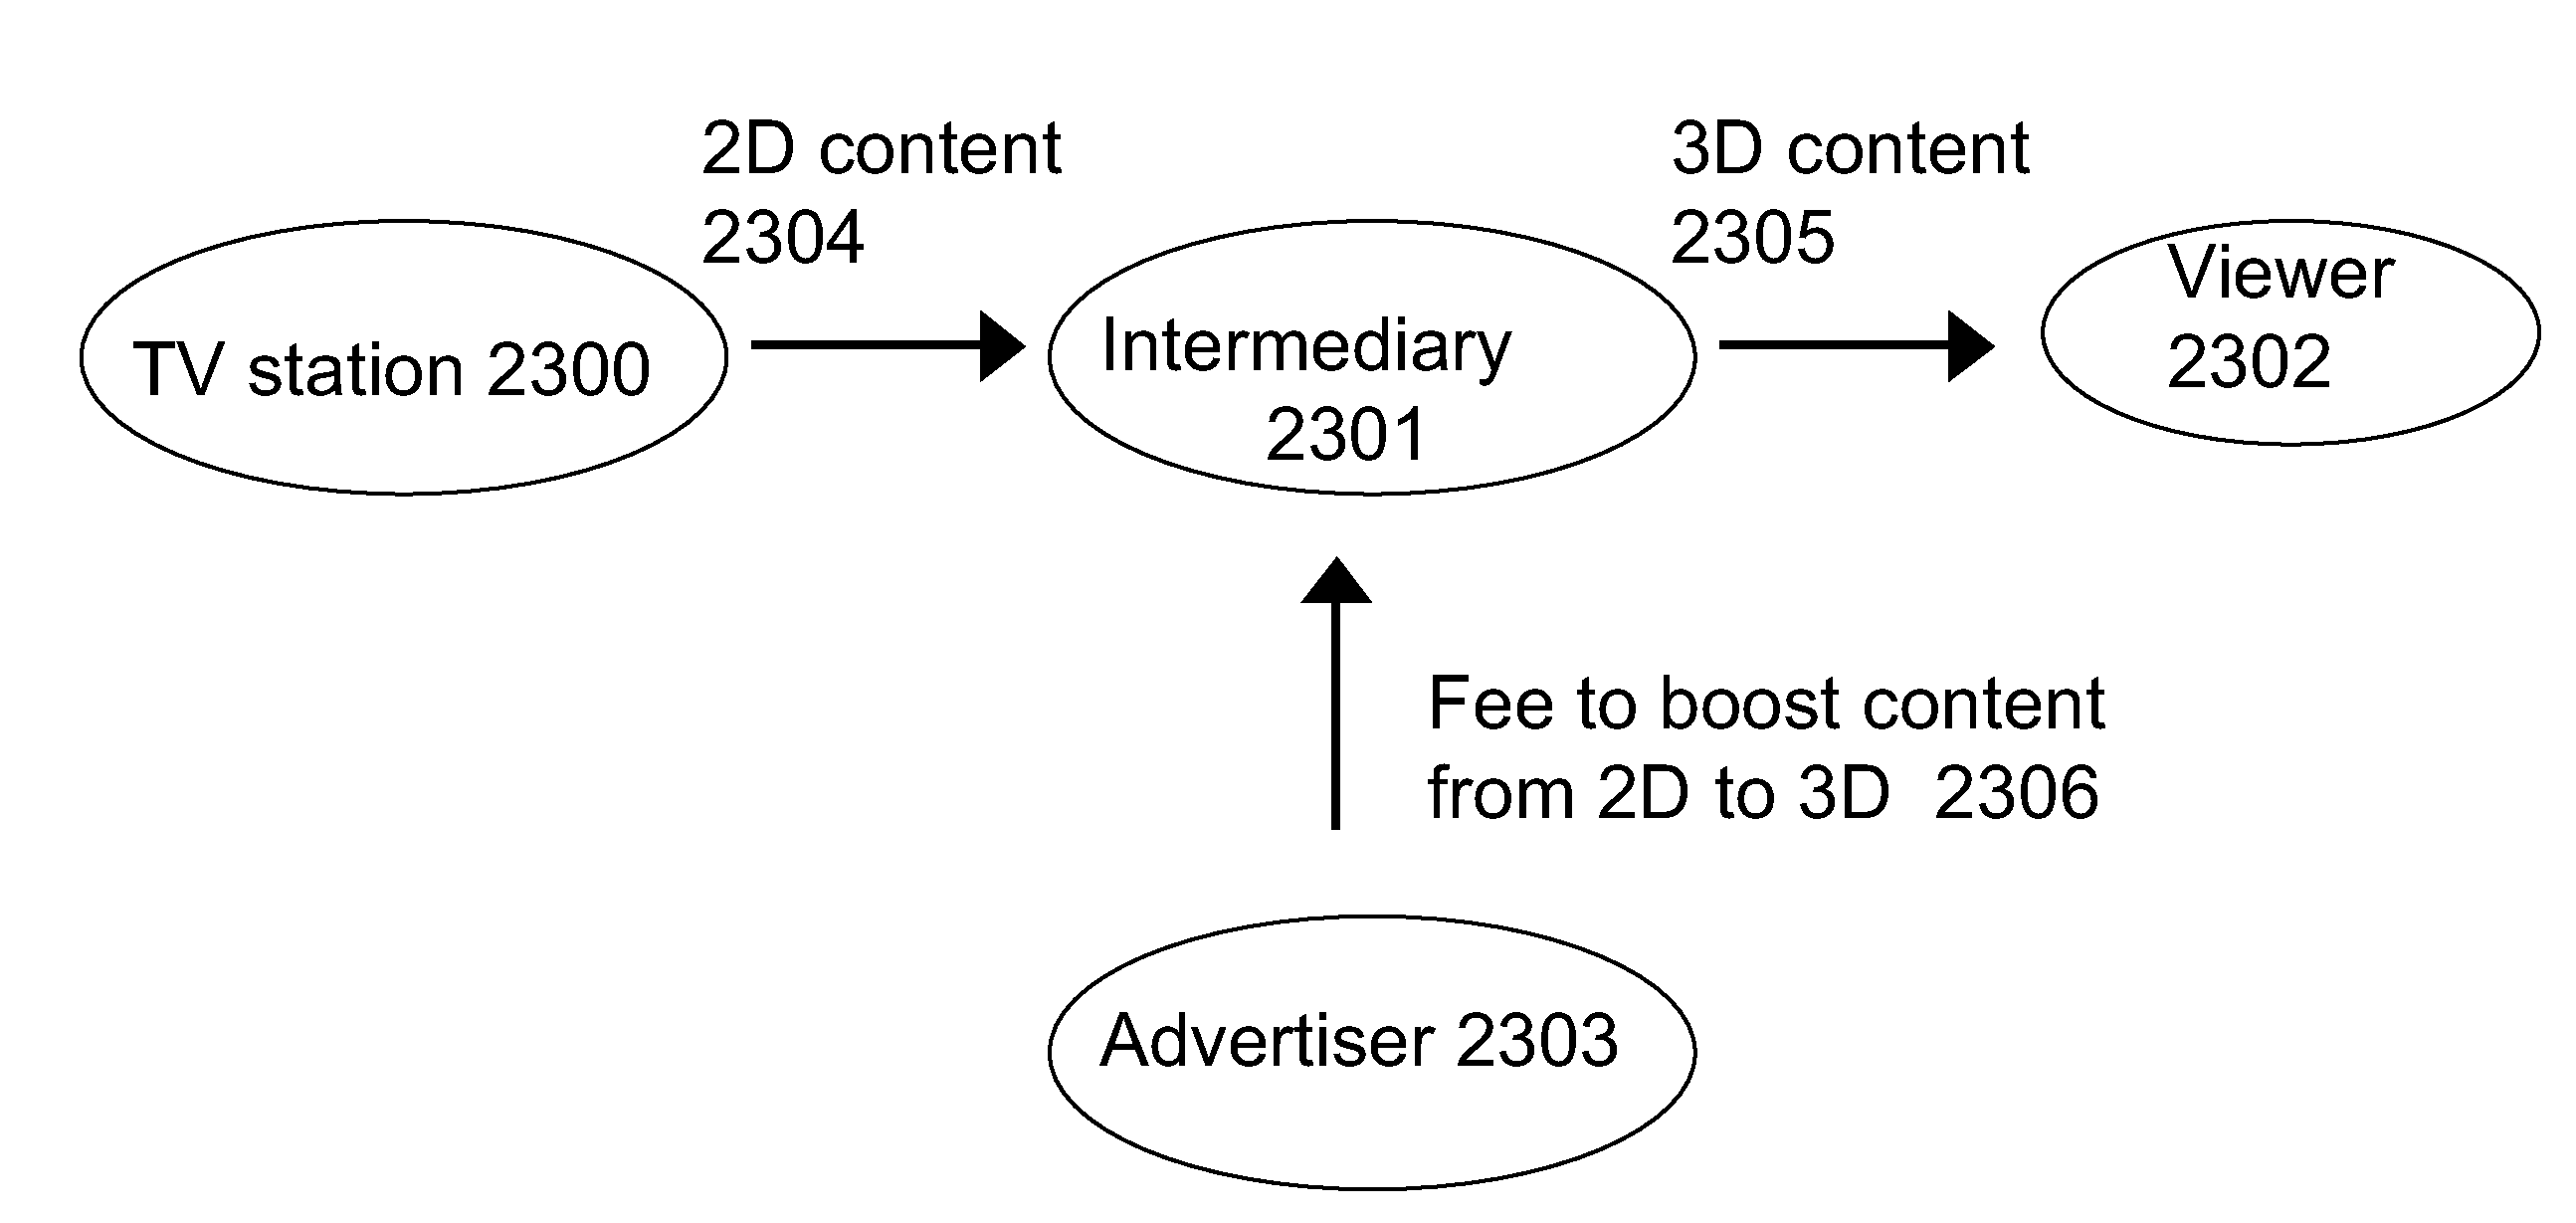 3D content generation system